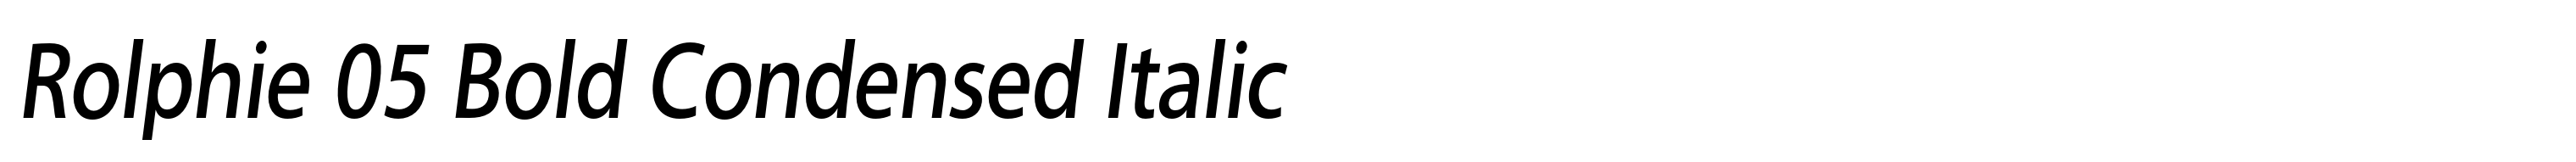 Rolphie 05 Bold Condensed Italic